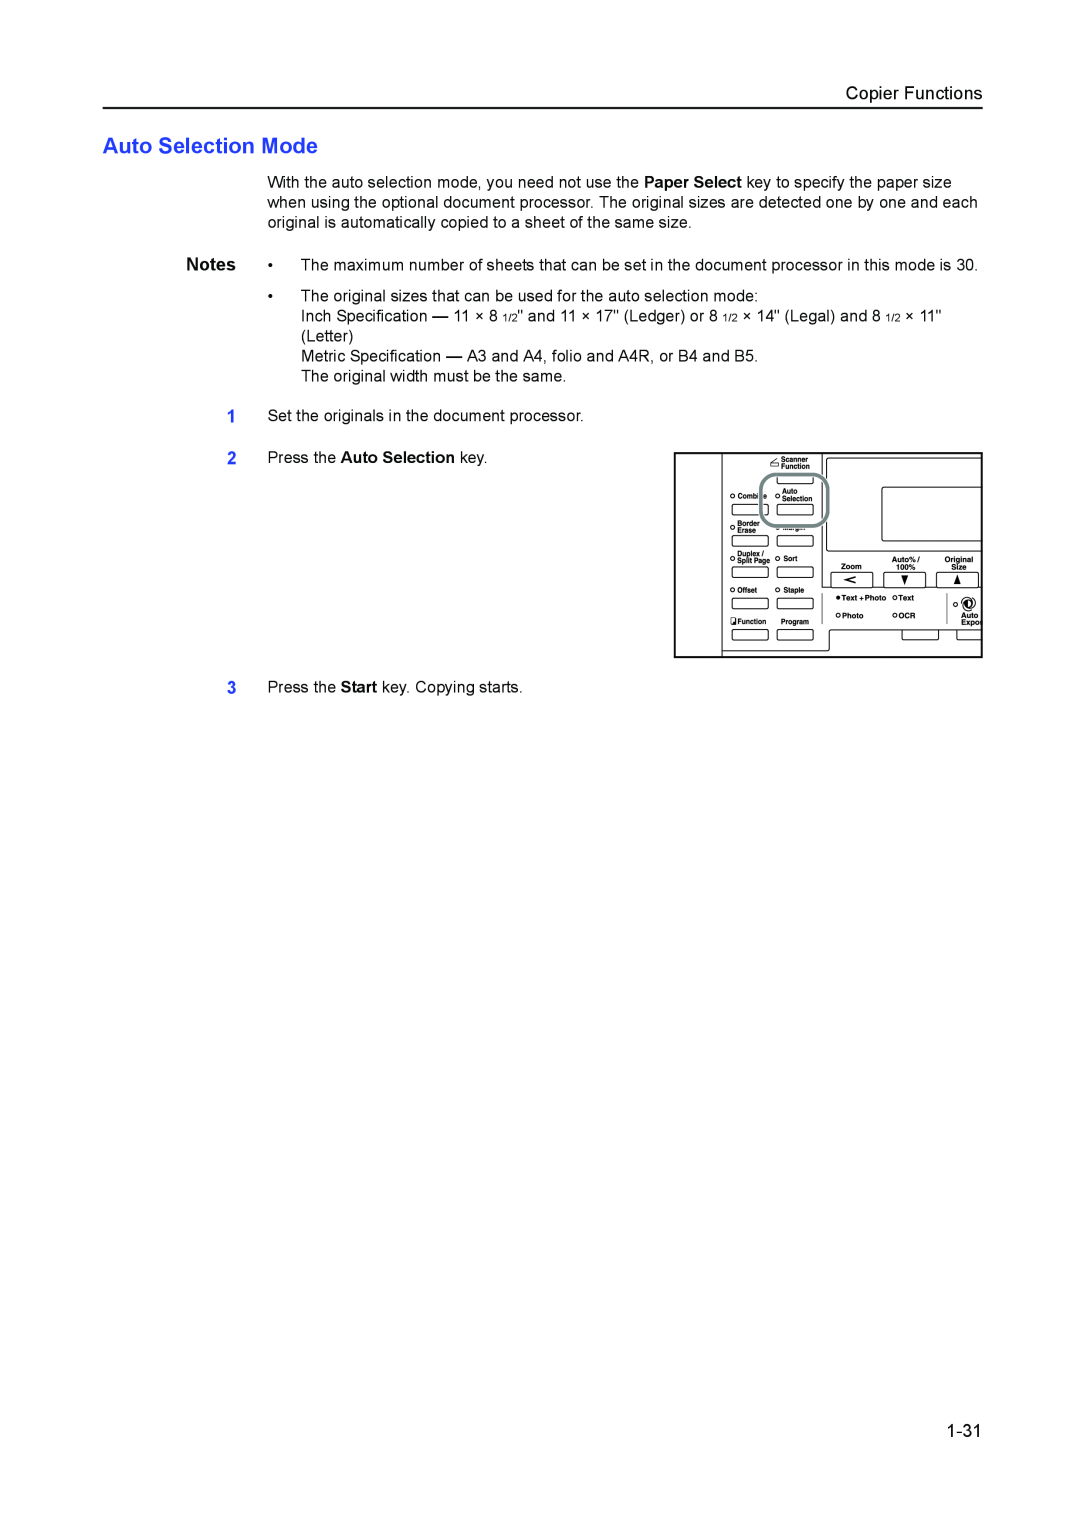 Kyocera 2050, 1650, 2550 manual Auto Selection Mode, 1-31, Copier Functions, Press the Auto Selection key 